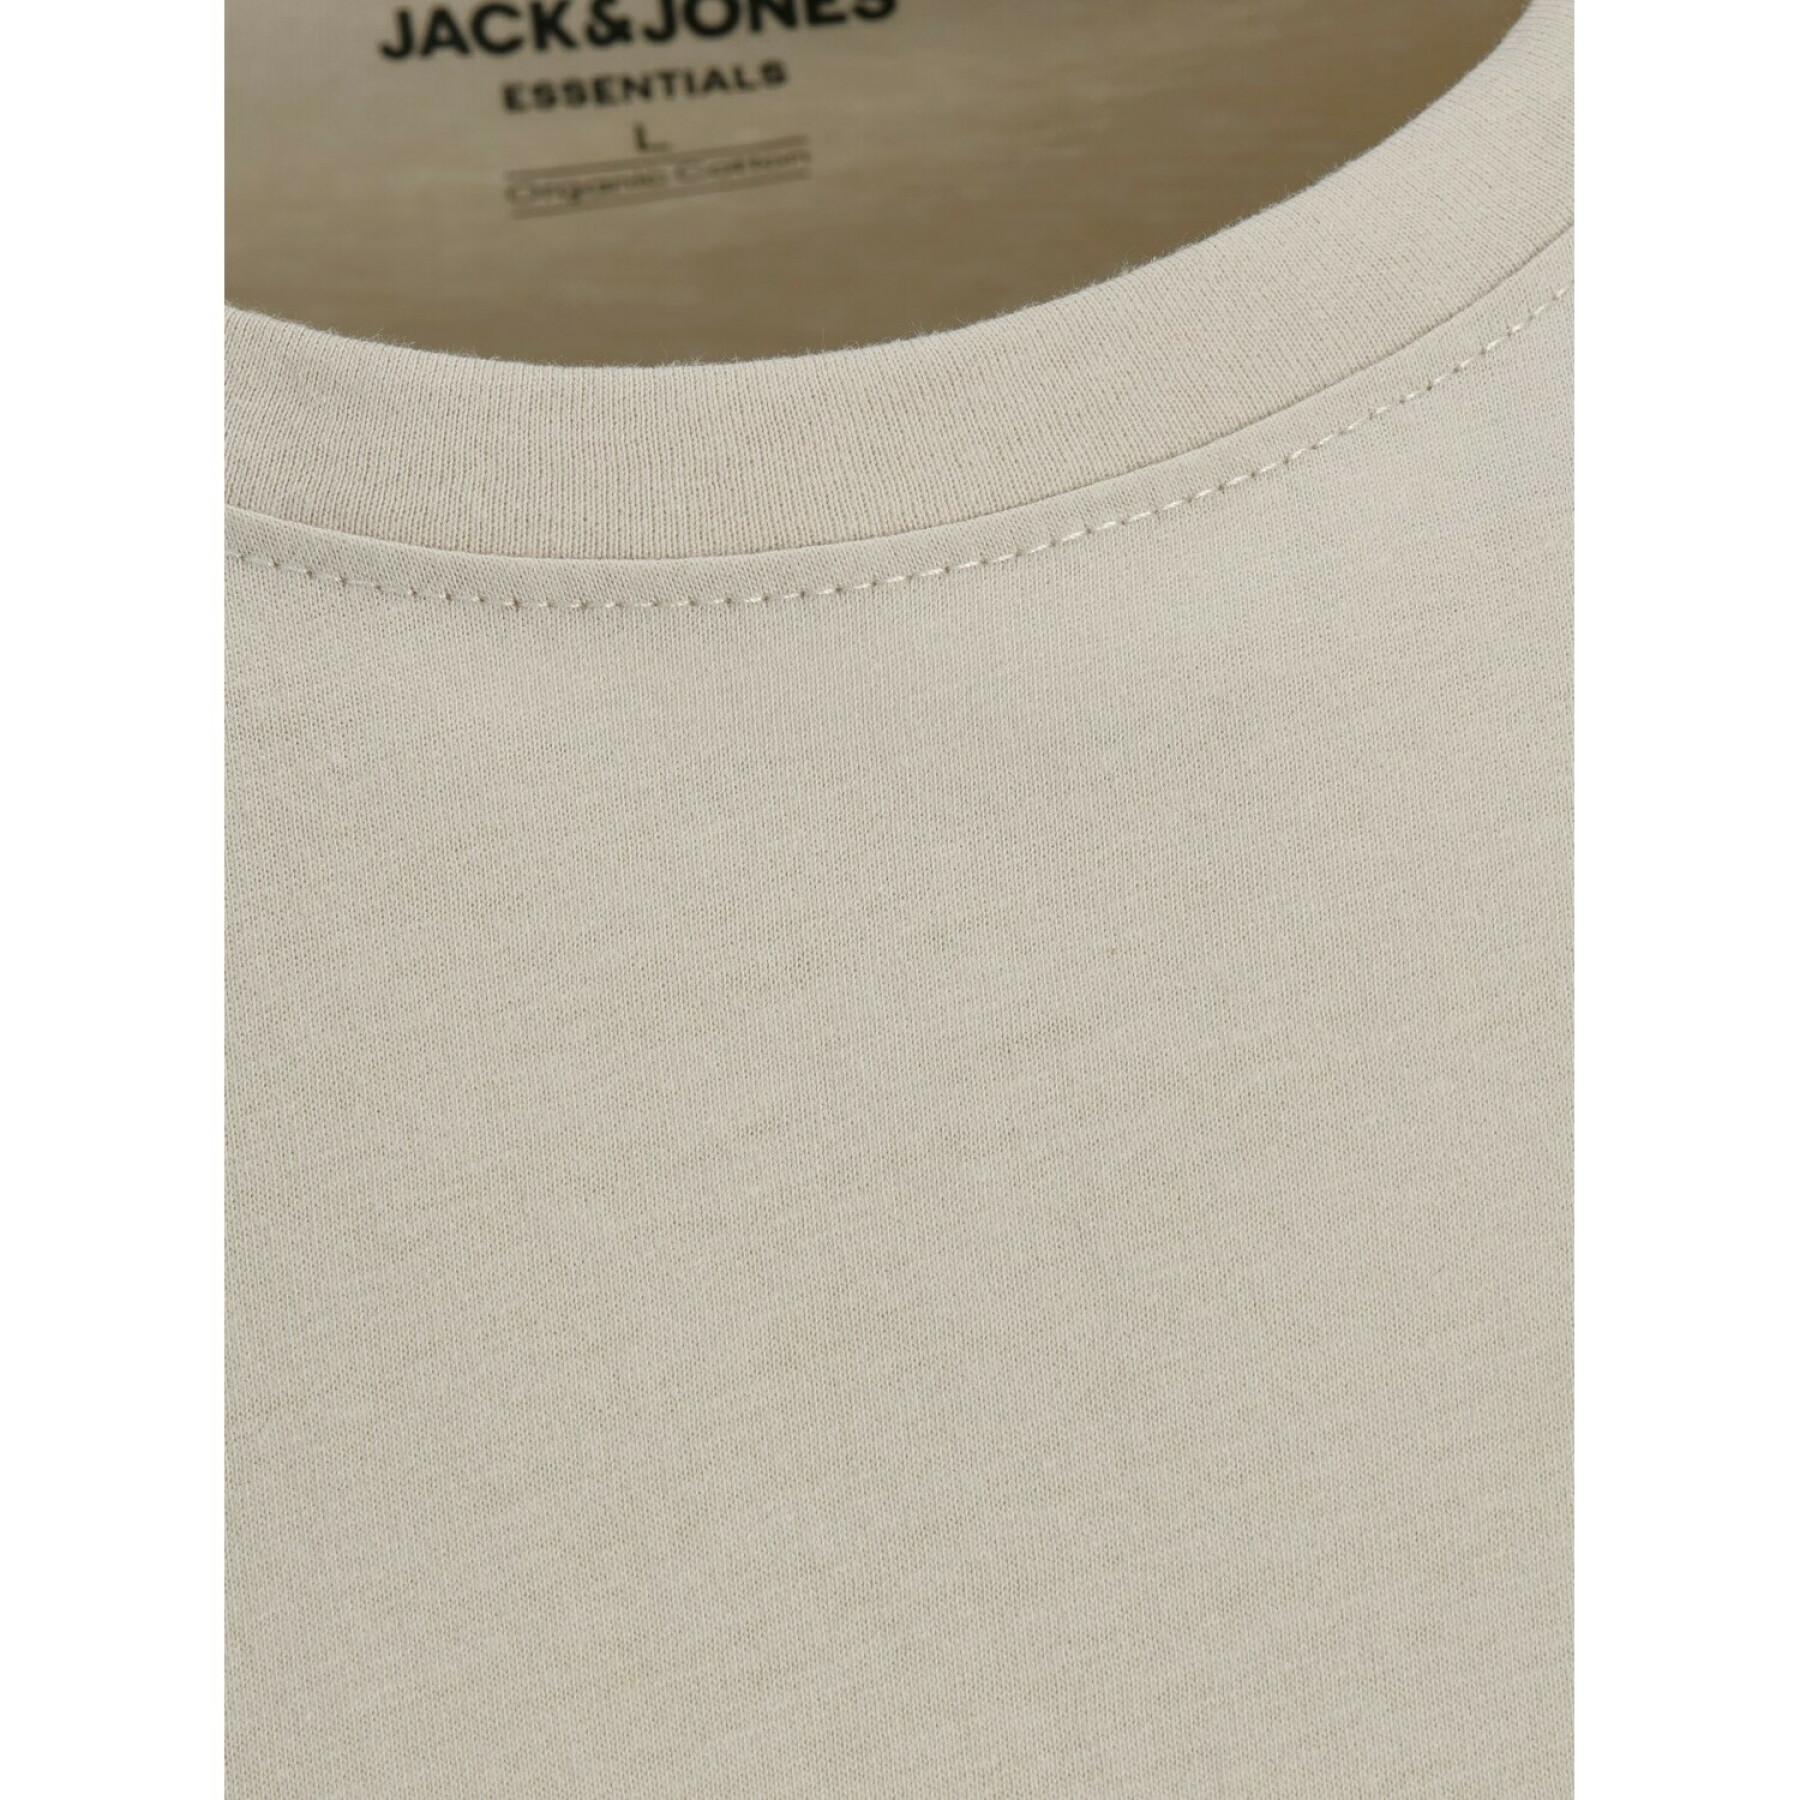 T-shirt Jack & Jones Noa